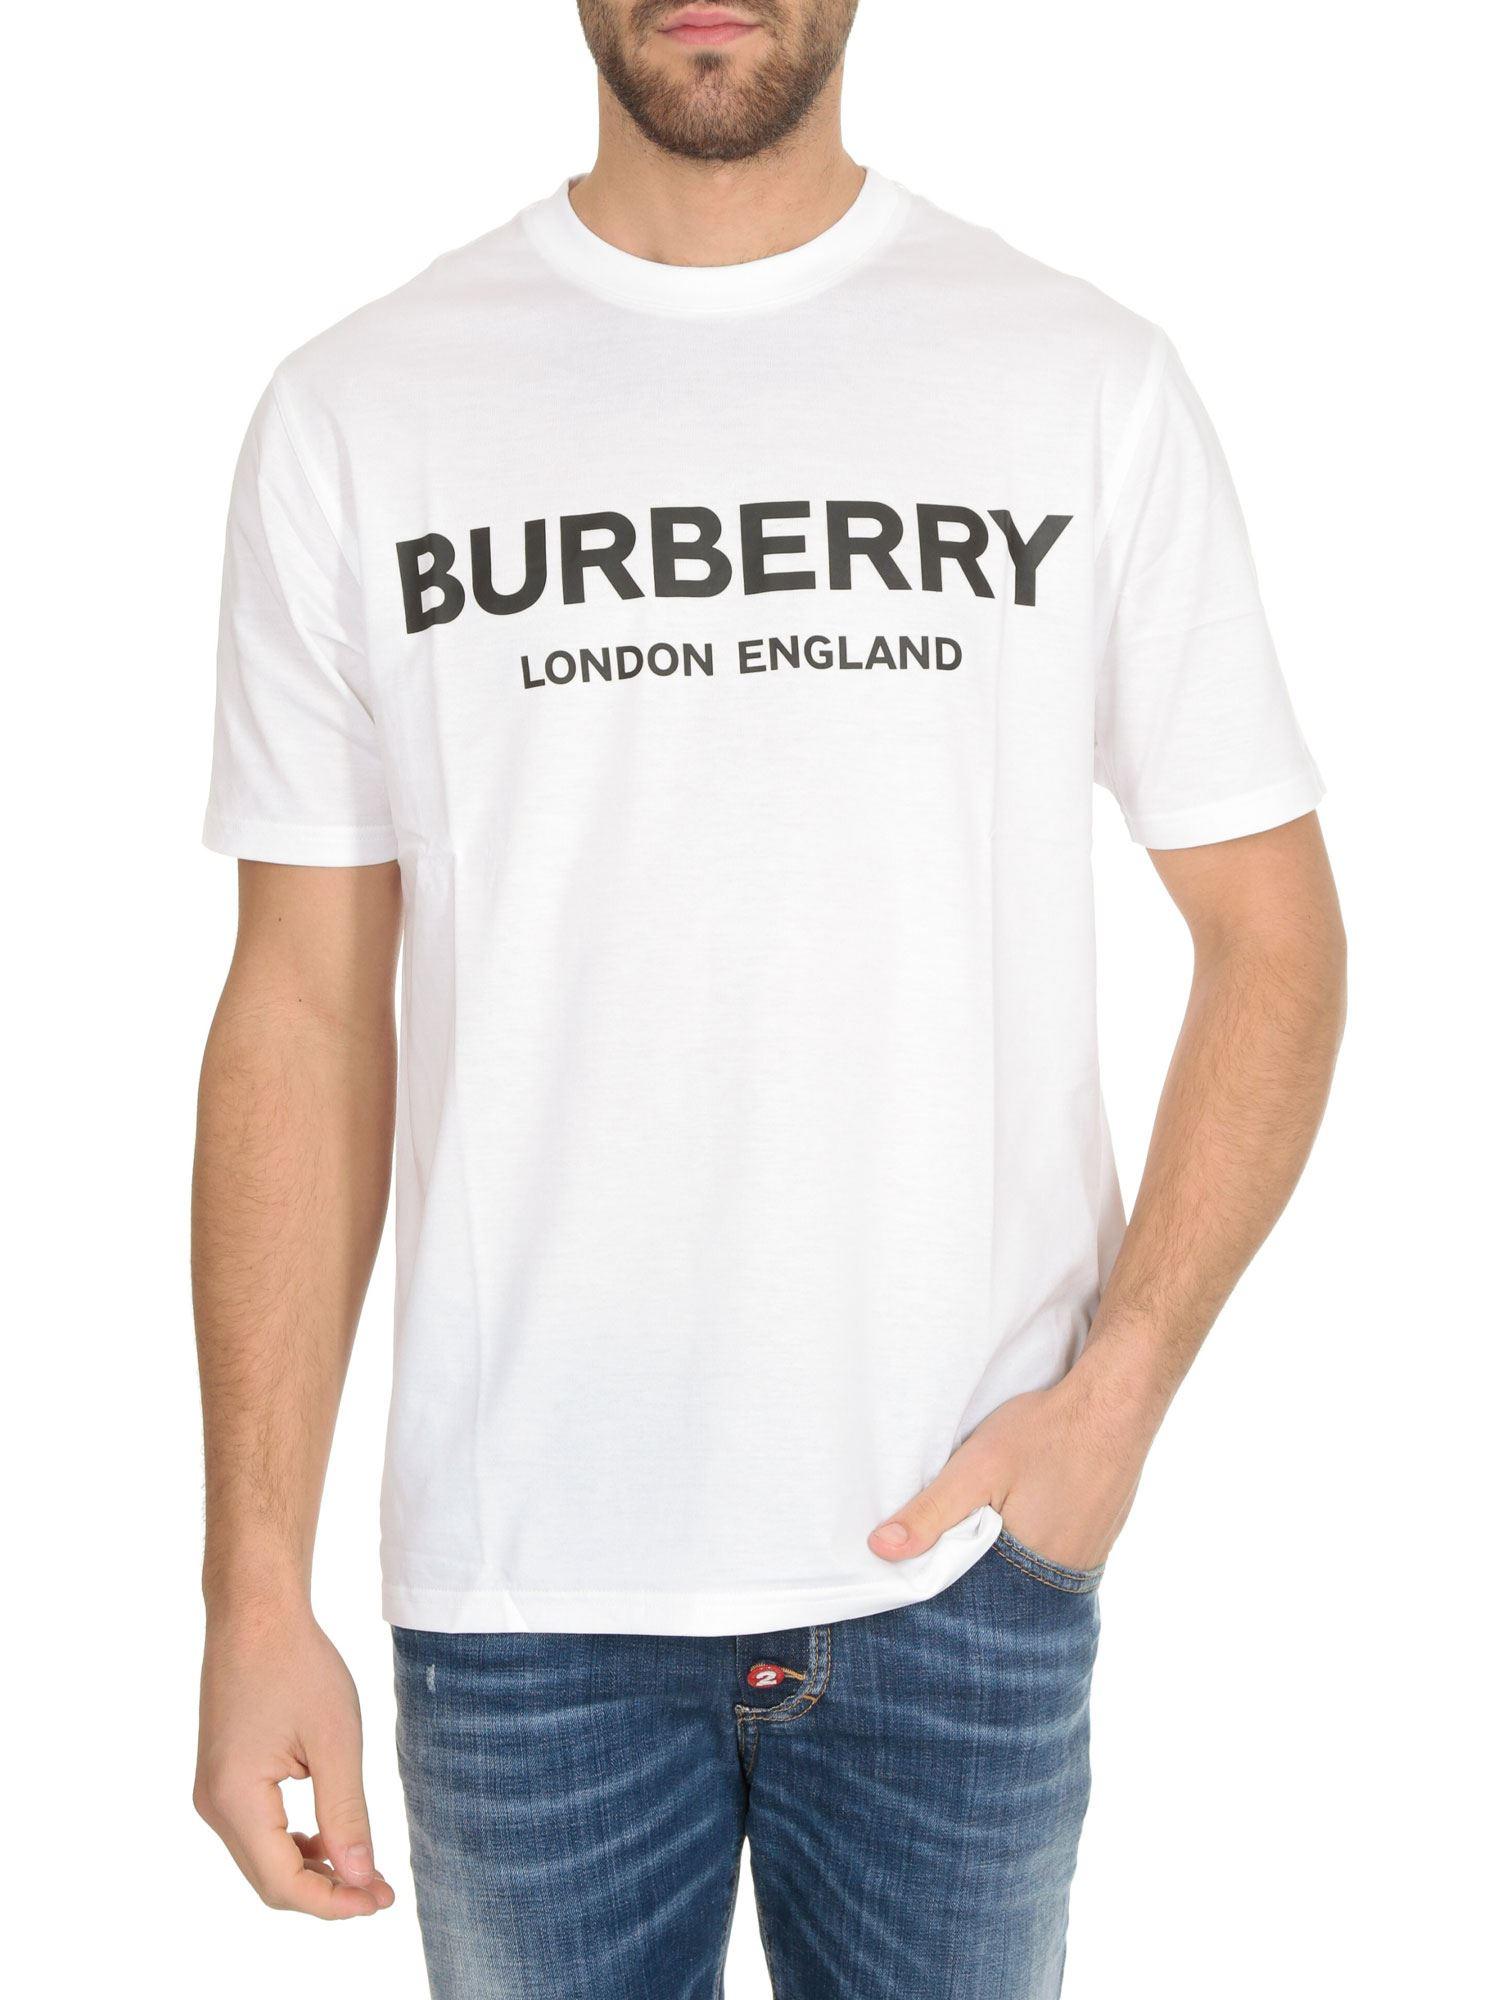 Burberry T-shirt in White for Men - Lyst